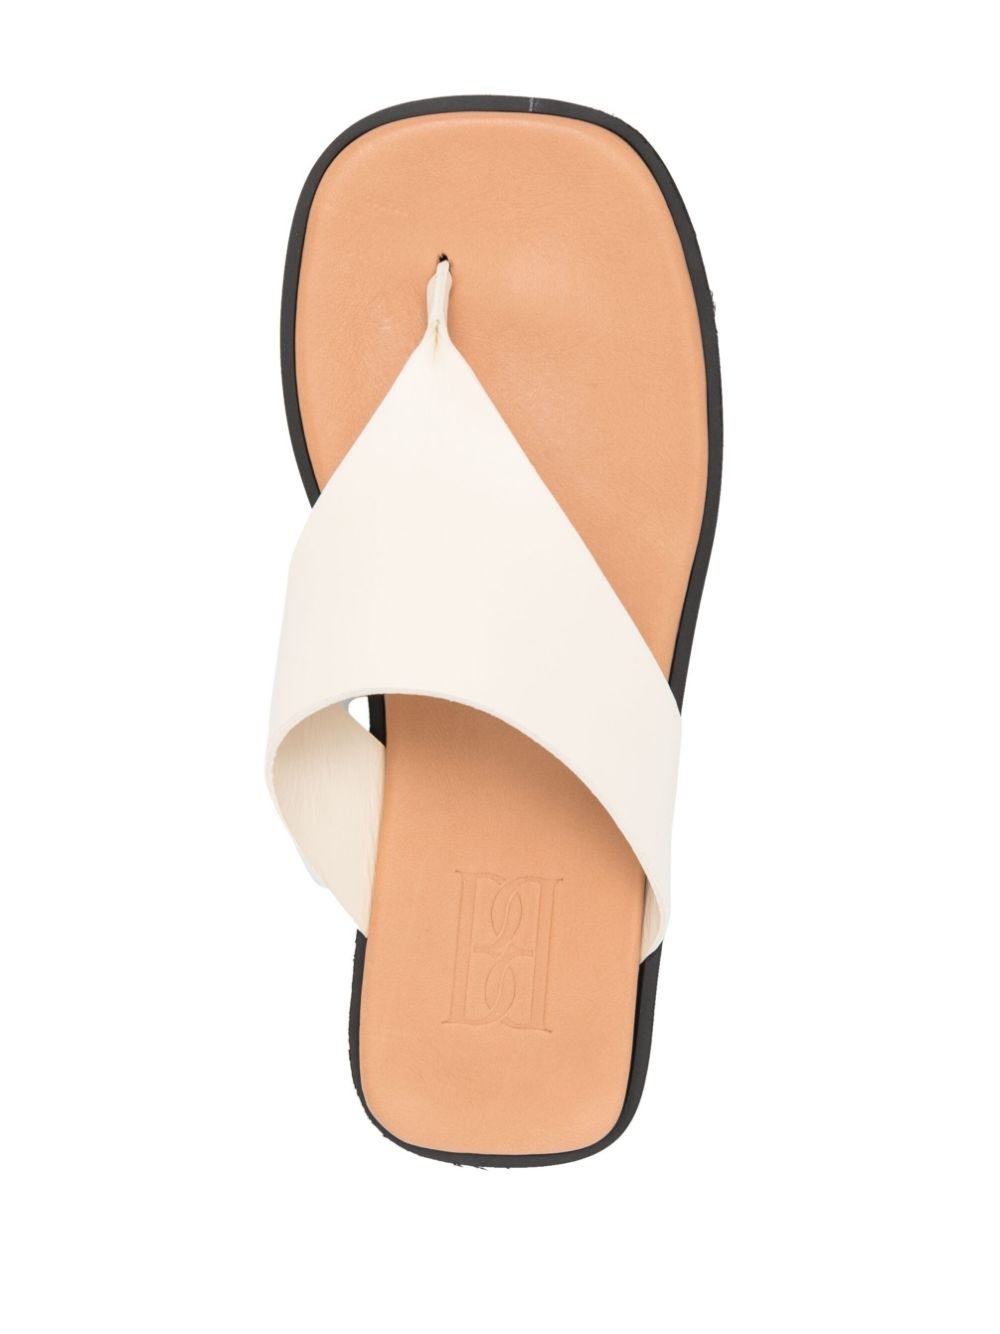 Marisol leather sandals - 4